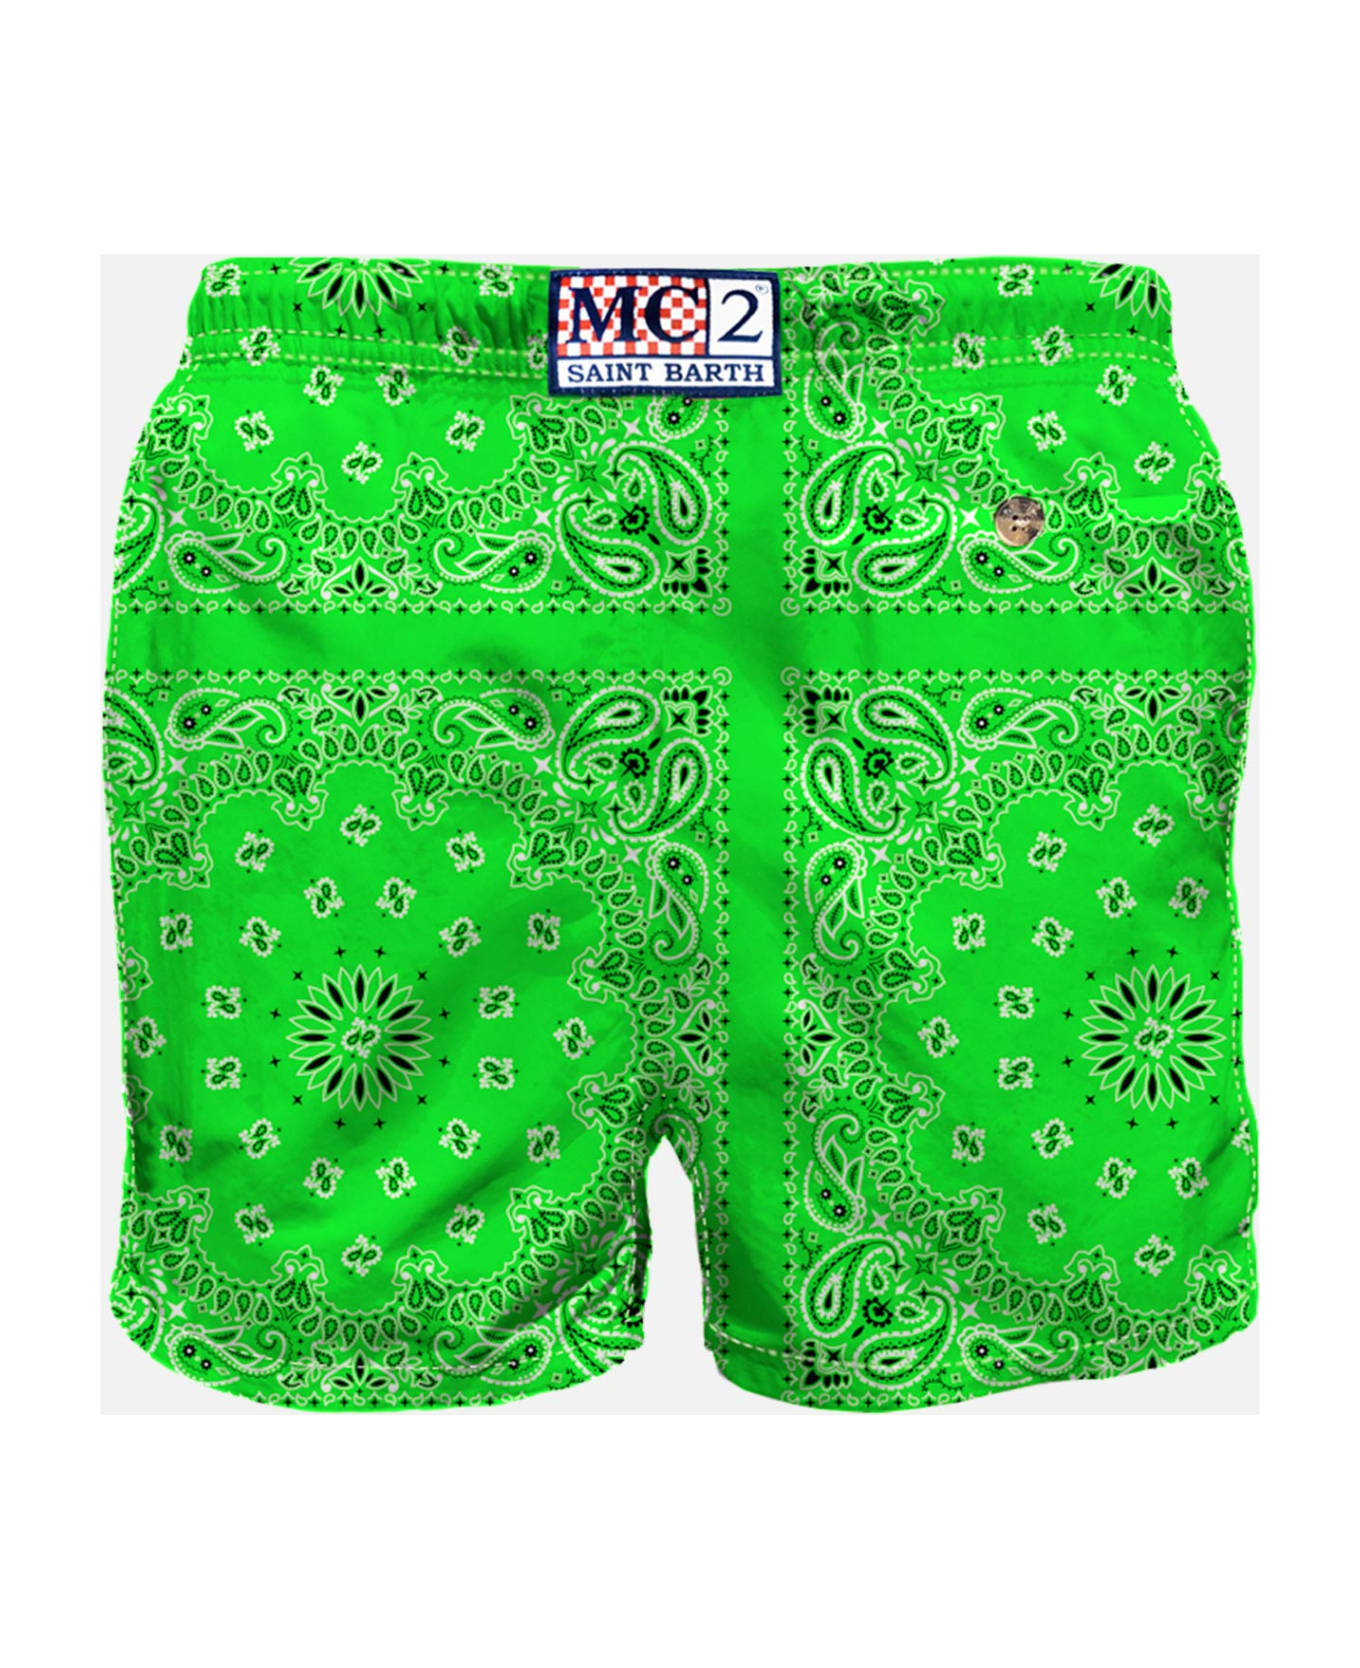 MC2 Saint Barth Man Swim Shorts With Green Bandanna Print - VERDE FLUO